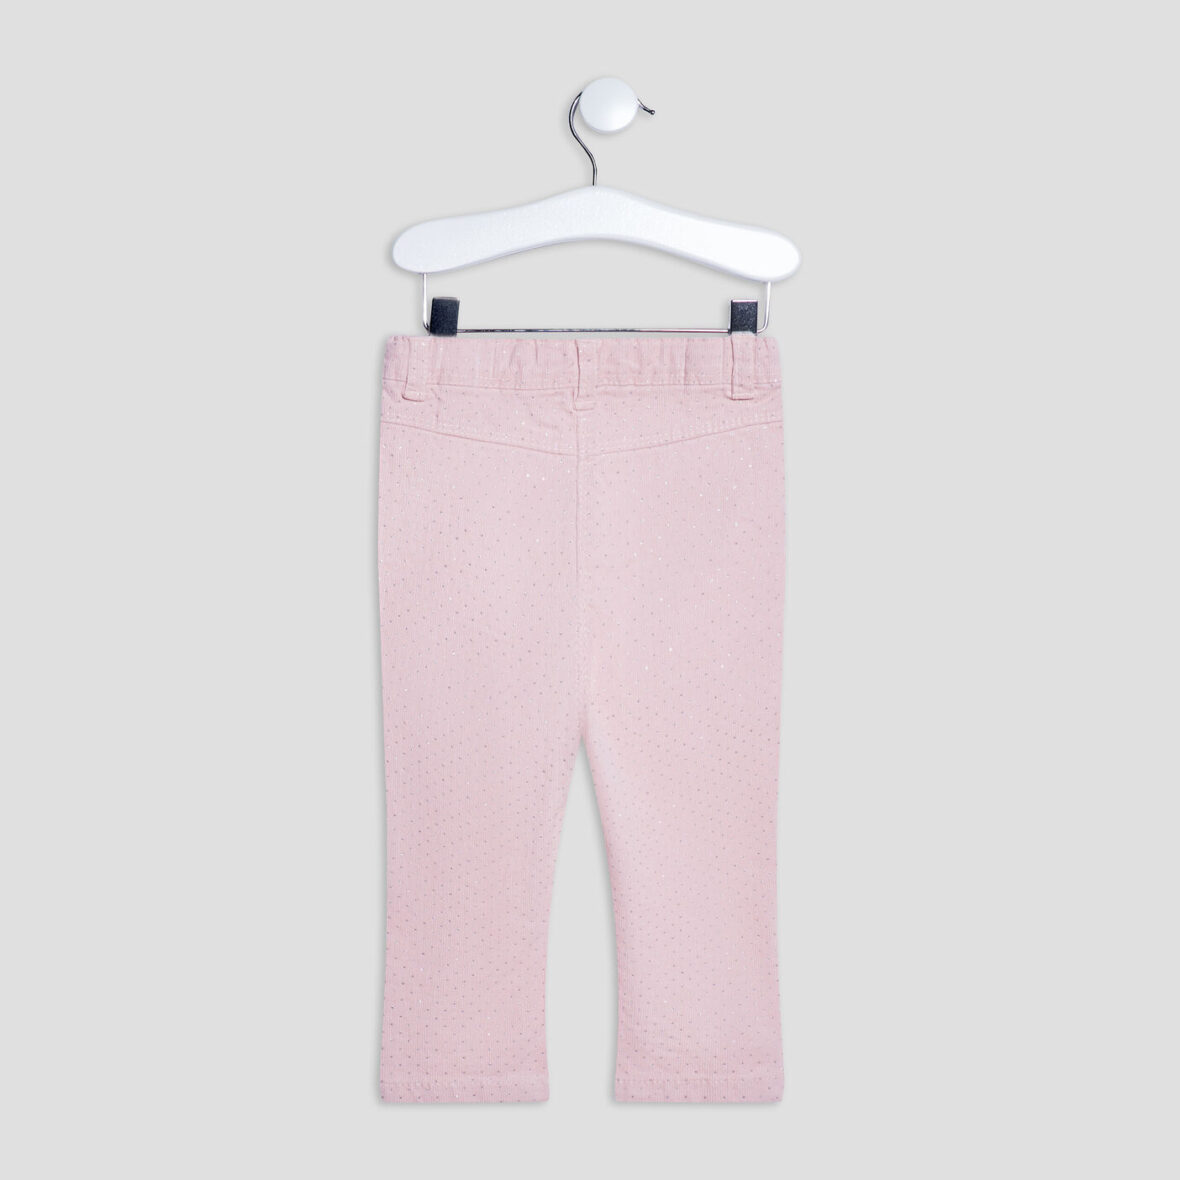 pantalon-slim-taille-ajustable-rose-clair-bebef-a-36165600167451071